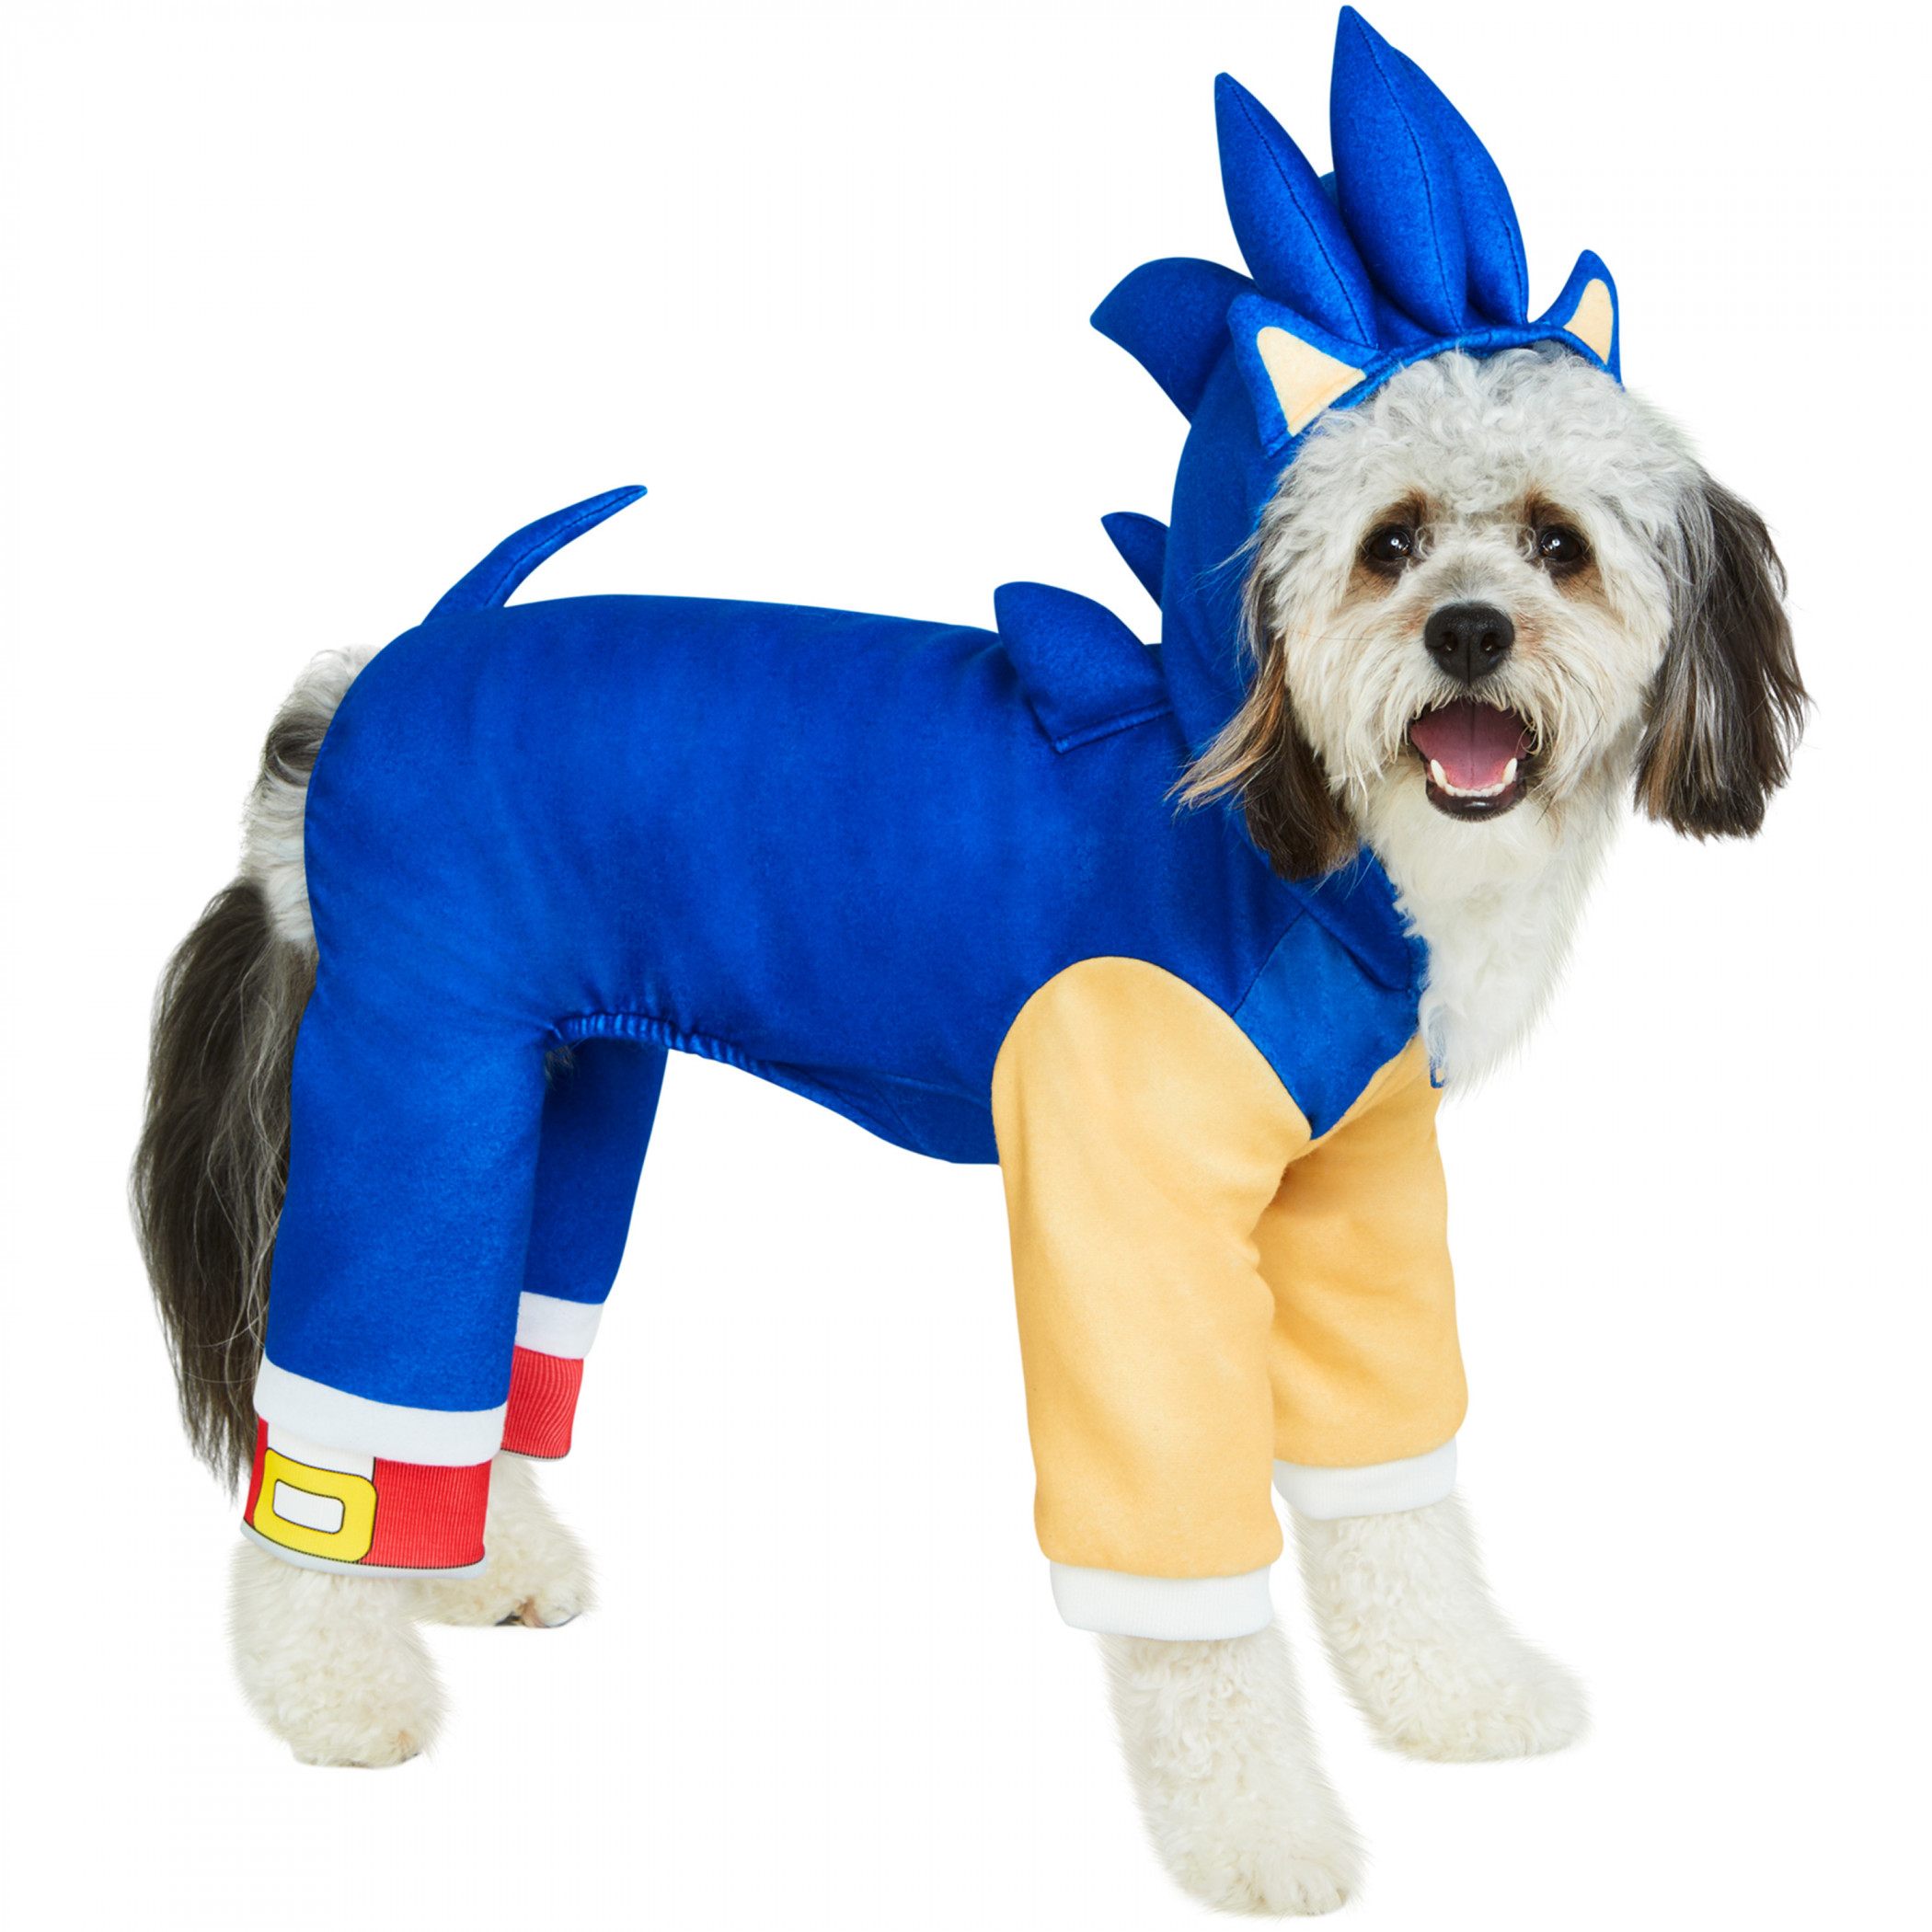 Sonic The Hedgehog Plush Dog Costume with Hood